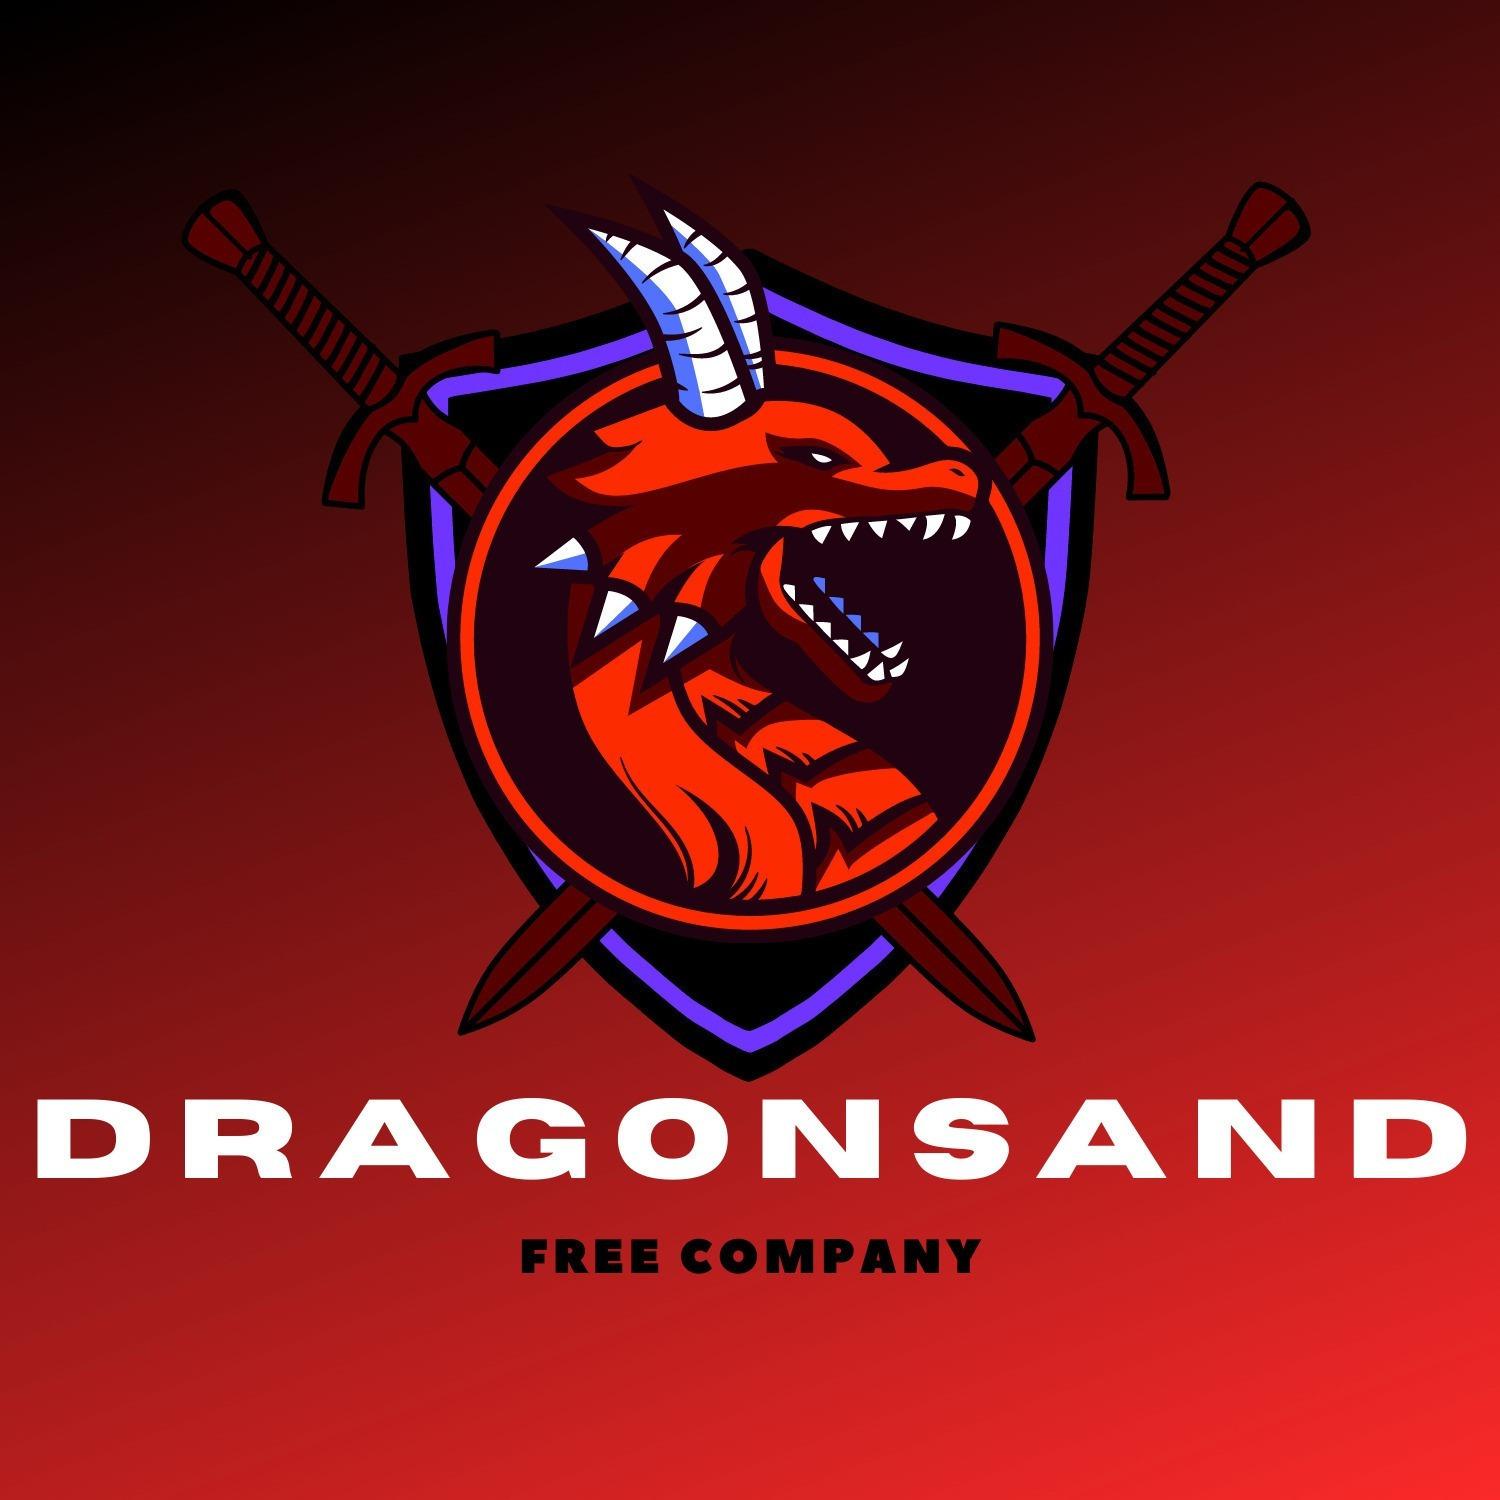 Dragonsand Free Company